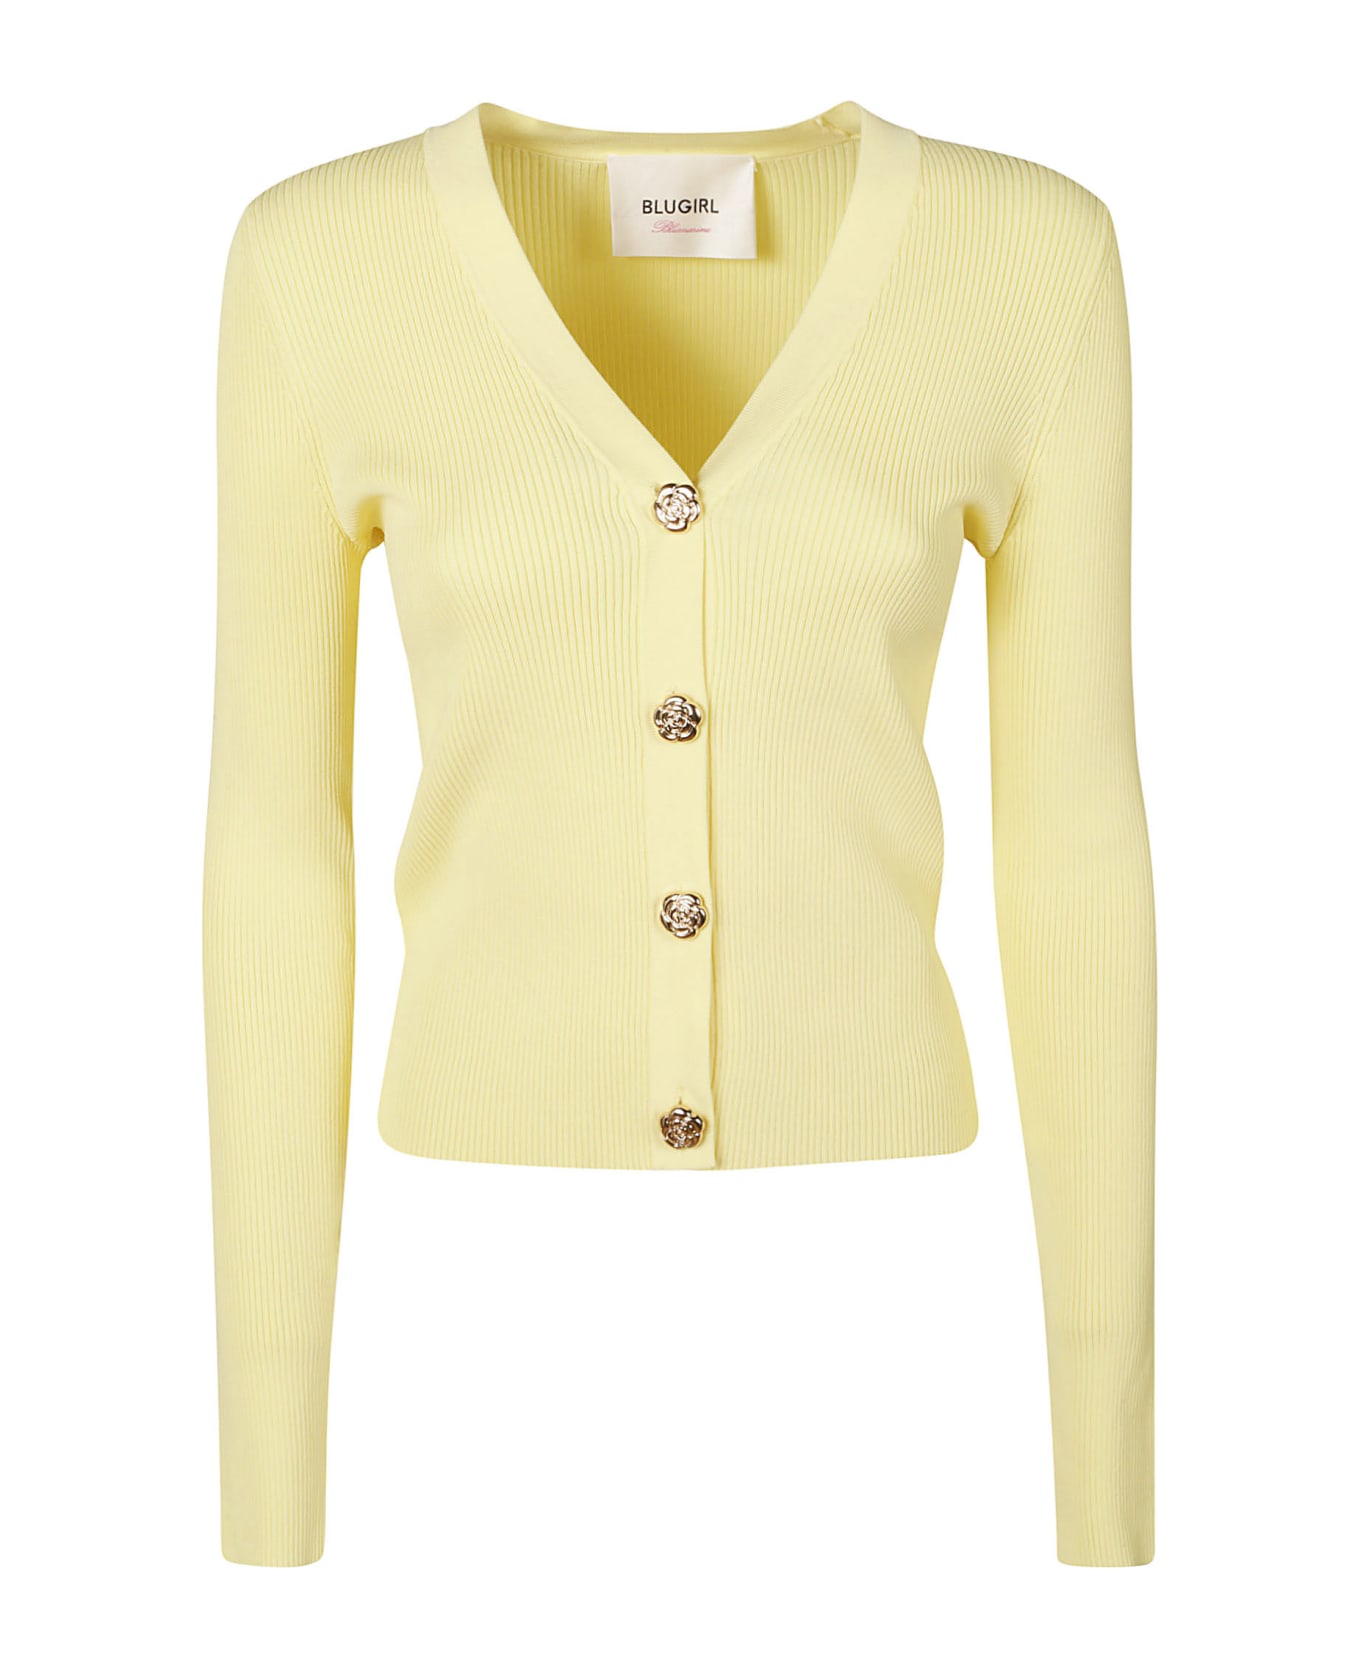 Blugirl Floral Buttons Rib Knit Cardigan - Yellow